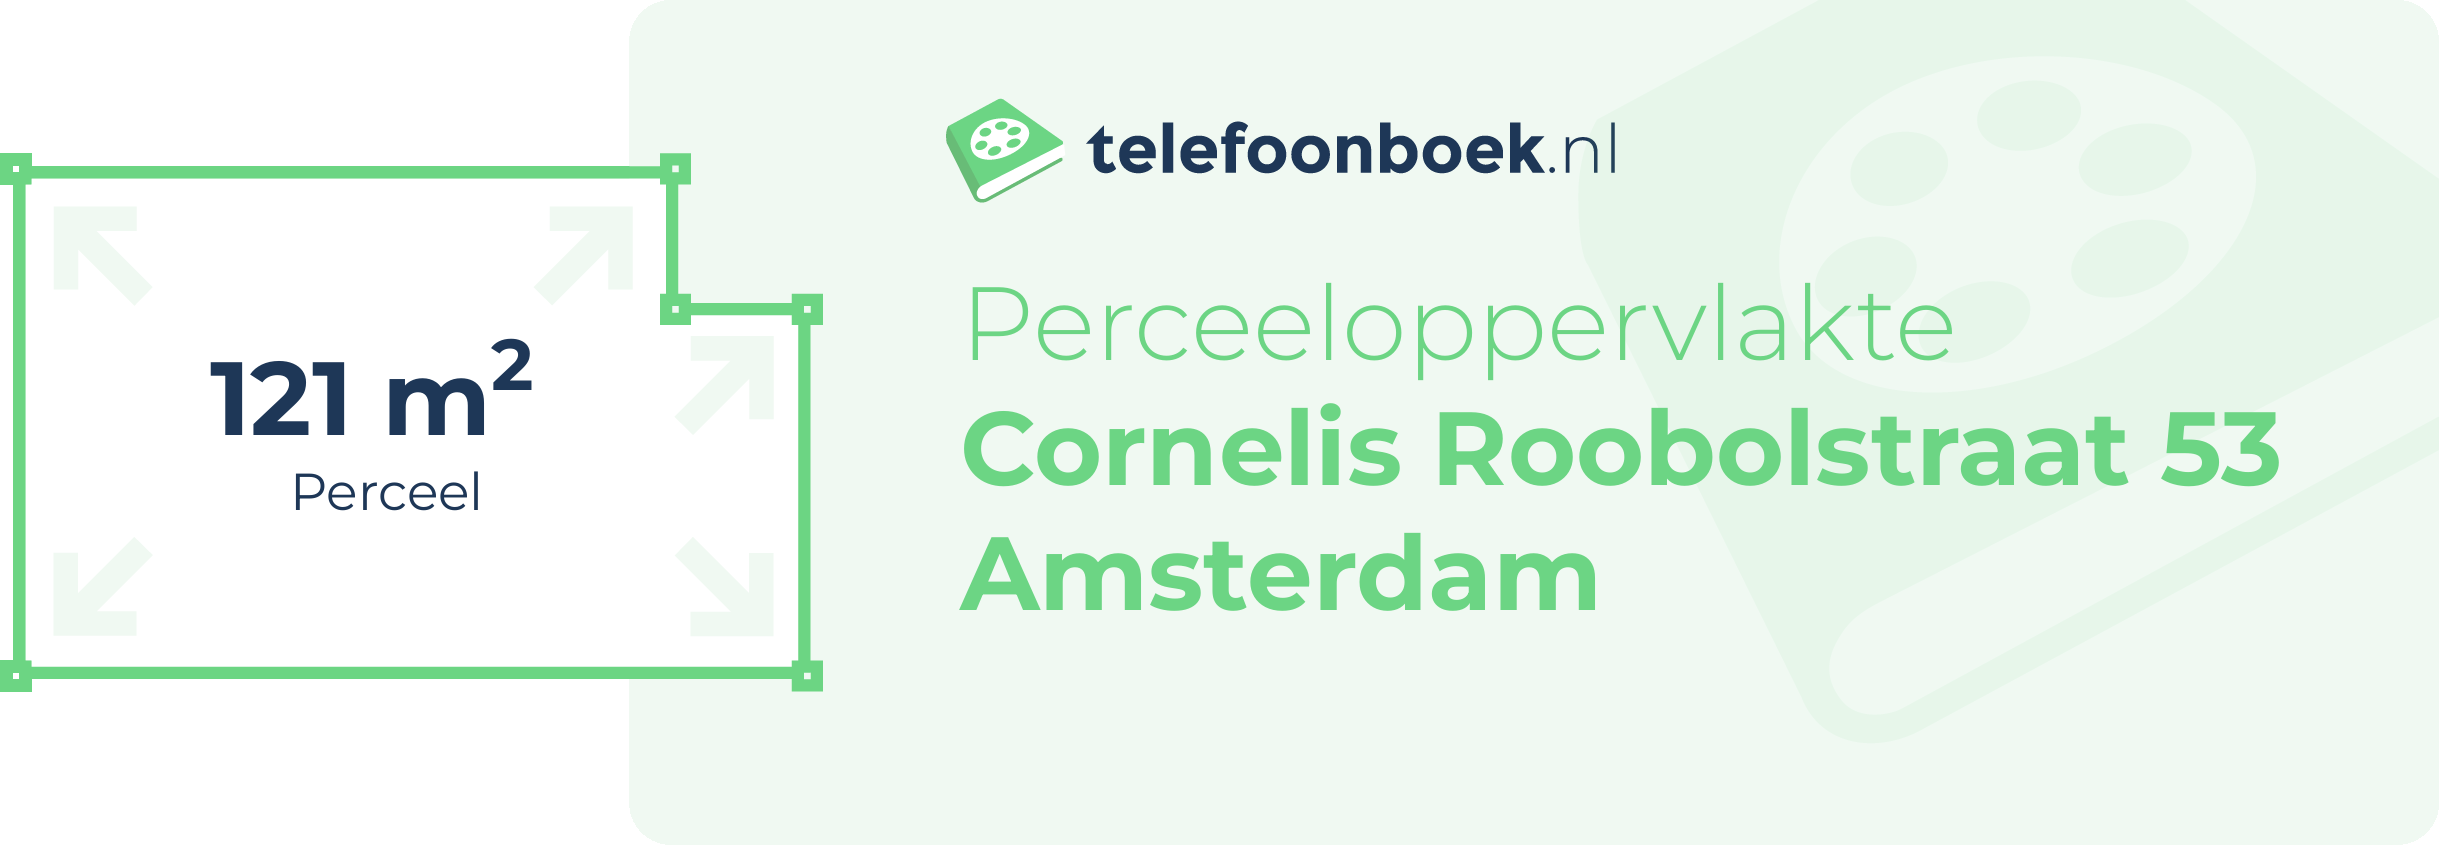 Perceeloppervlakte Cornelis Roobolstraat 53 Amsterdam